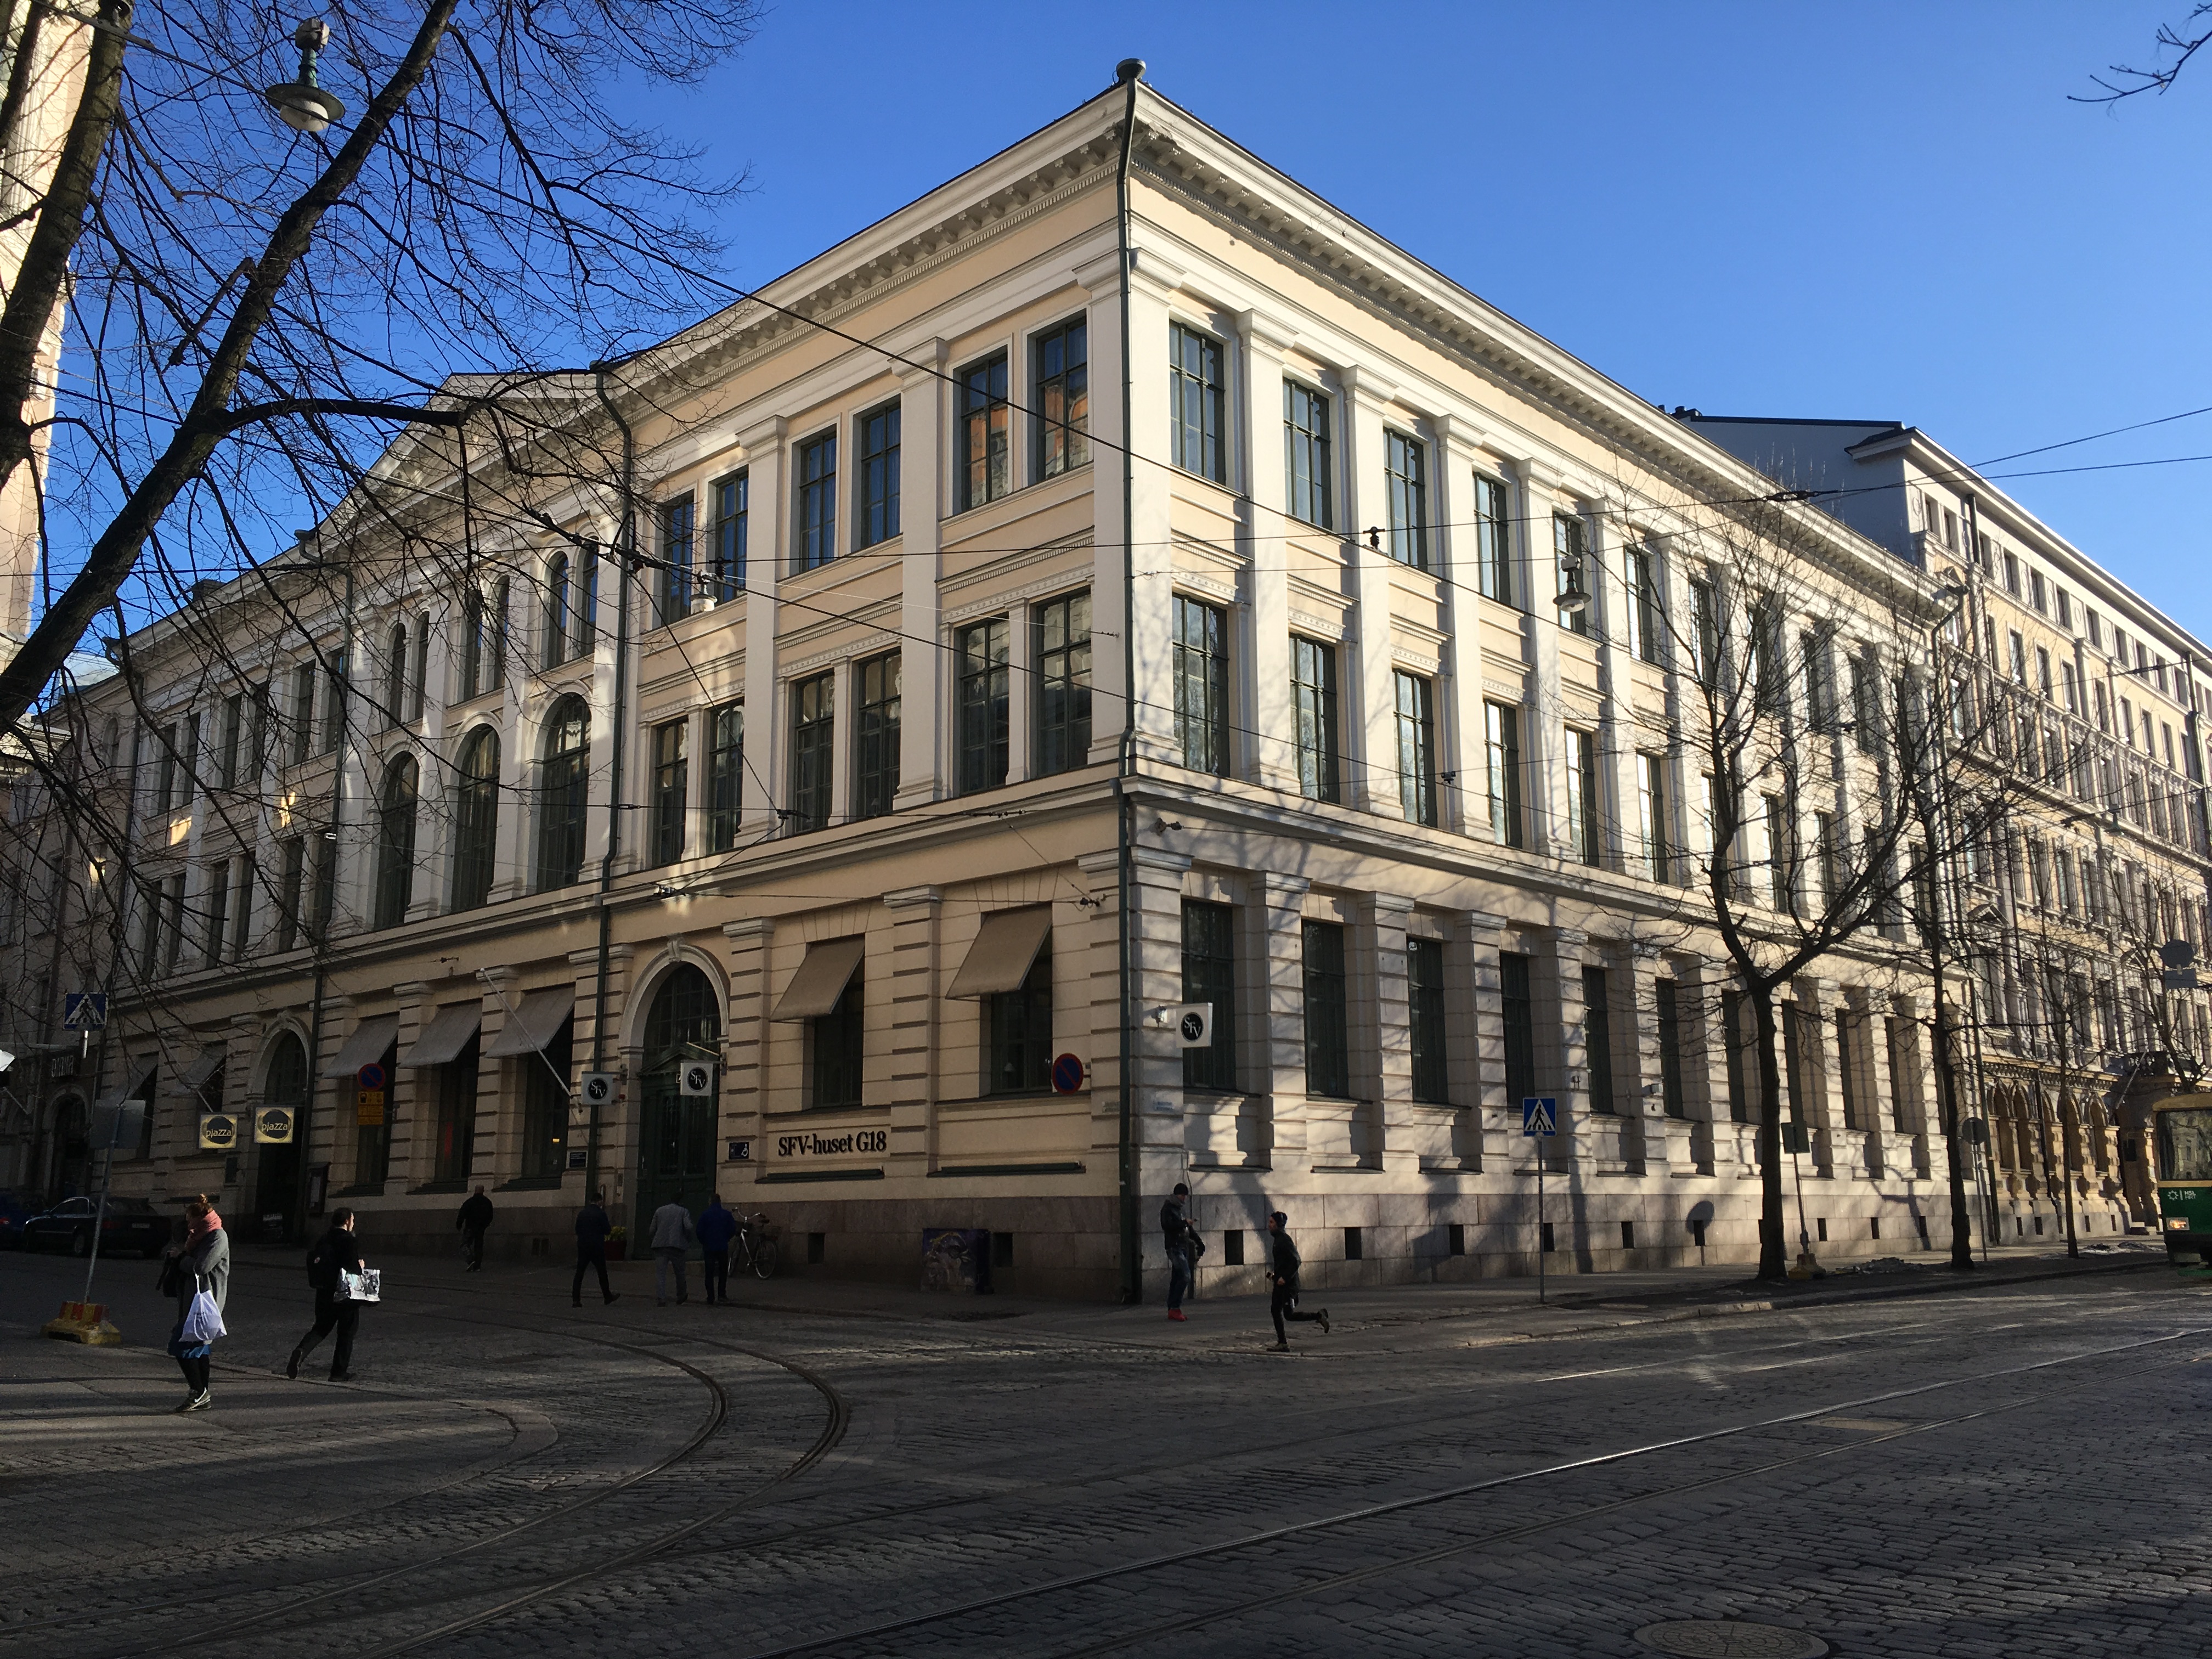 Medaljerna delades ut i "SFV-huset G18" som ligger på Georgsgatan i centrala Helsingfors.